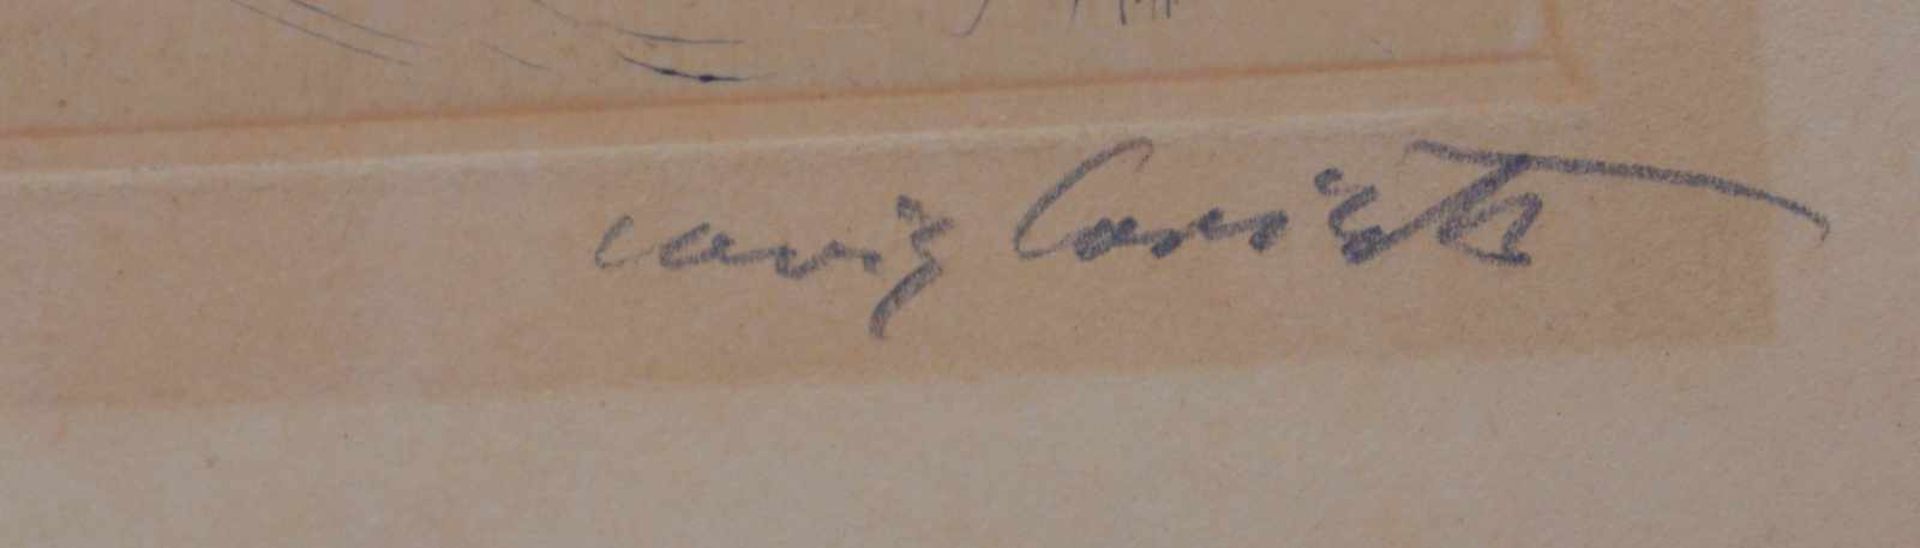 Lovis Corinth (* 21. Juli 1858 in Tapiau, Ostpreußen; † 17. Juli 1925 in Zandvoort): - Image 2 of 2